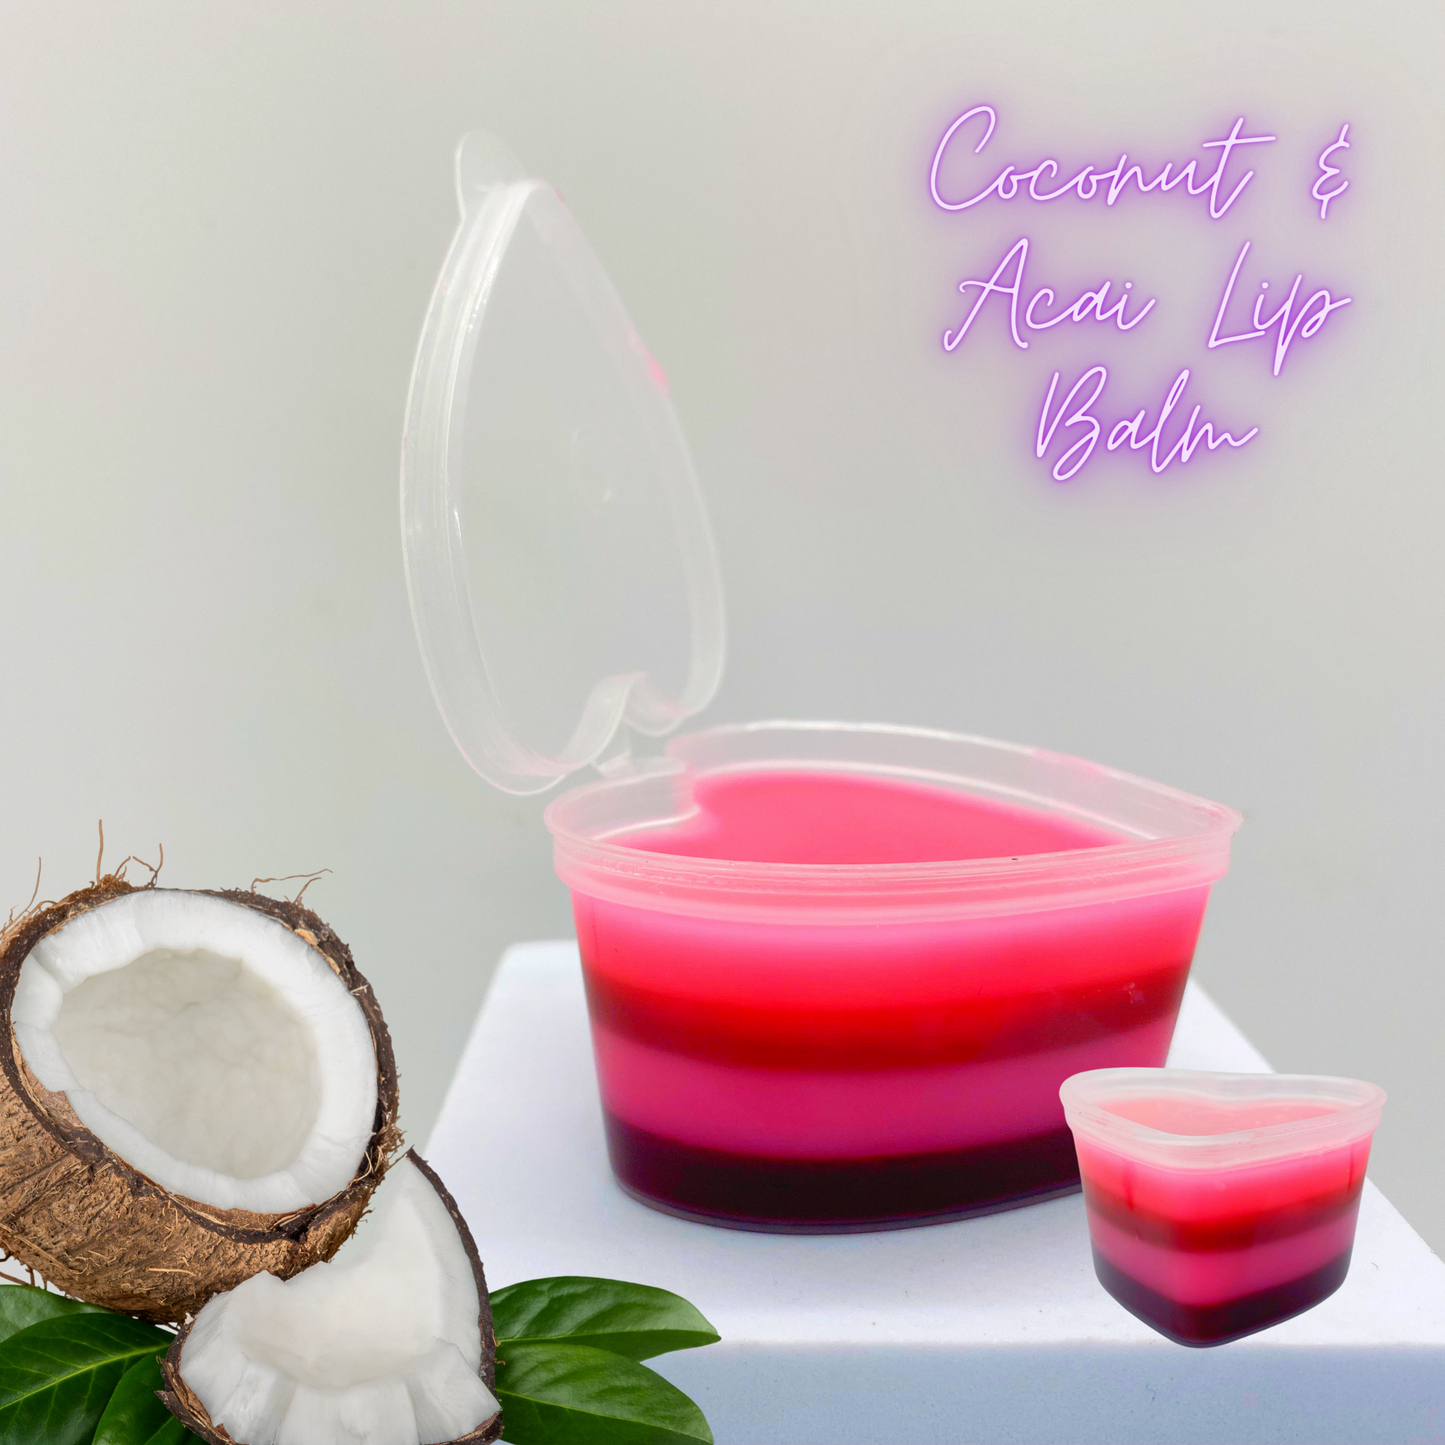 Multi-layered Coconut & Acai Lip Balm